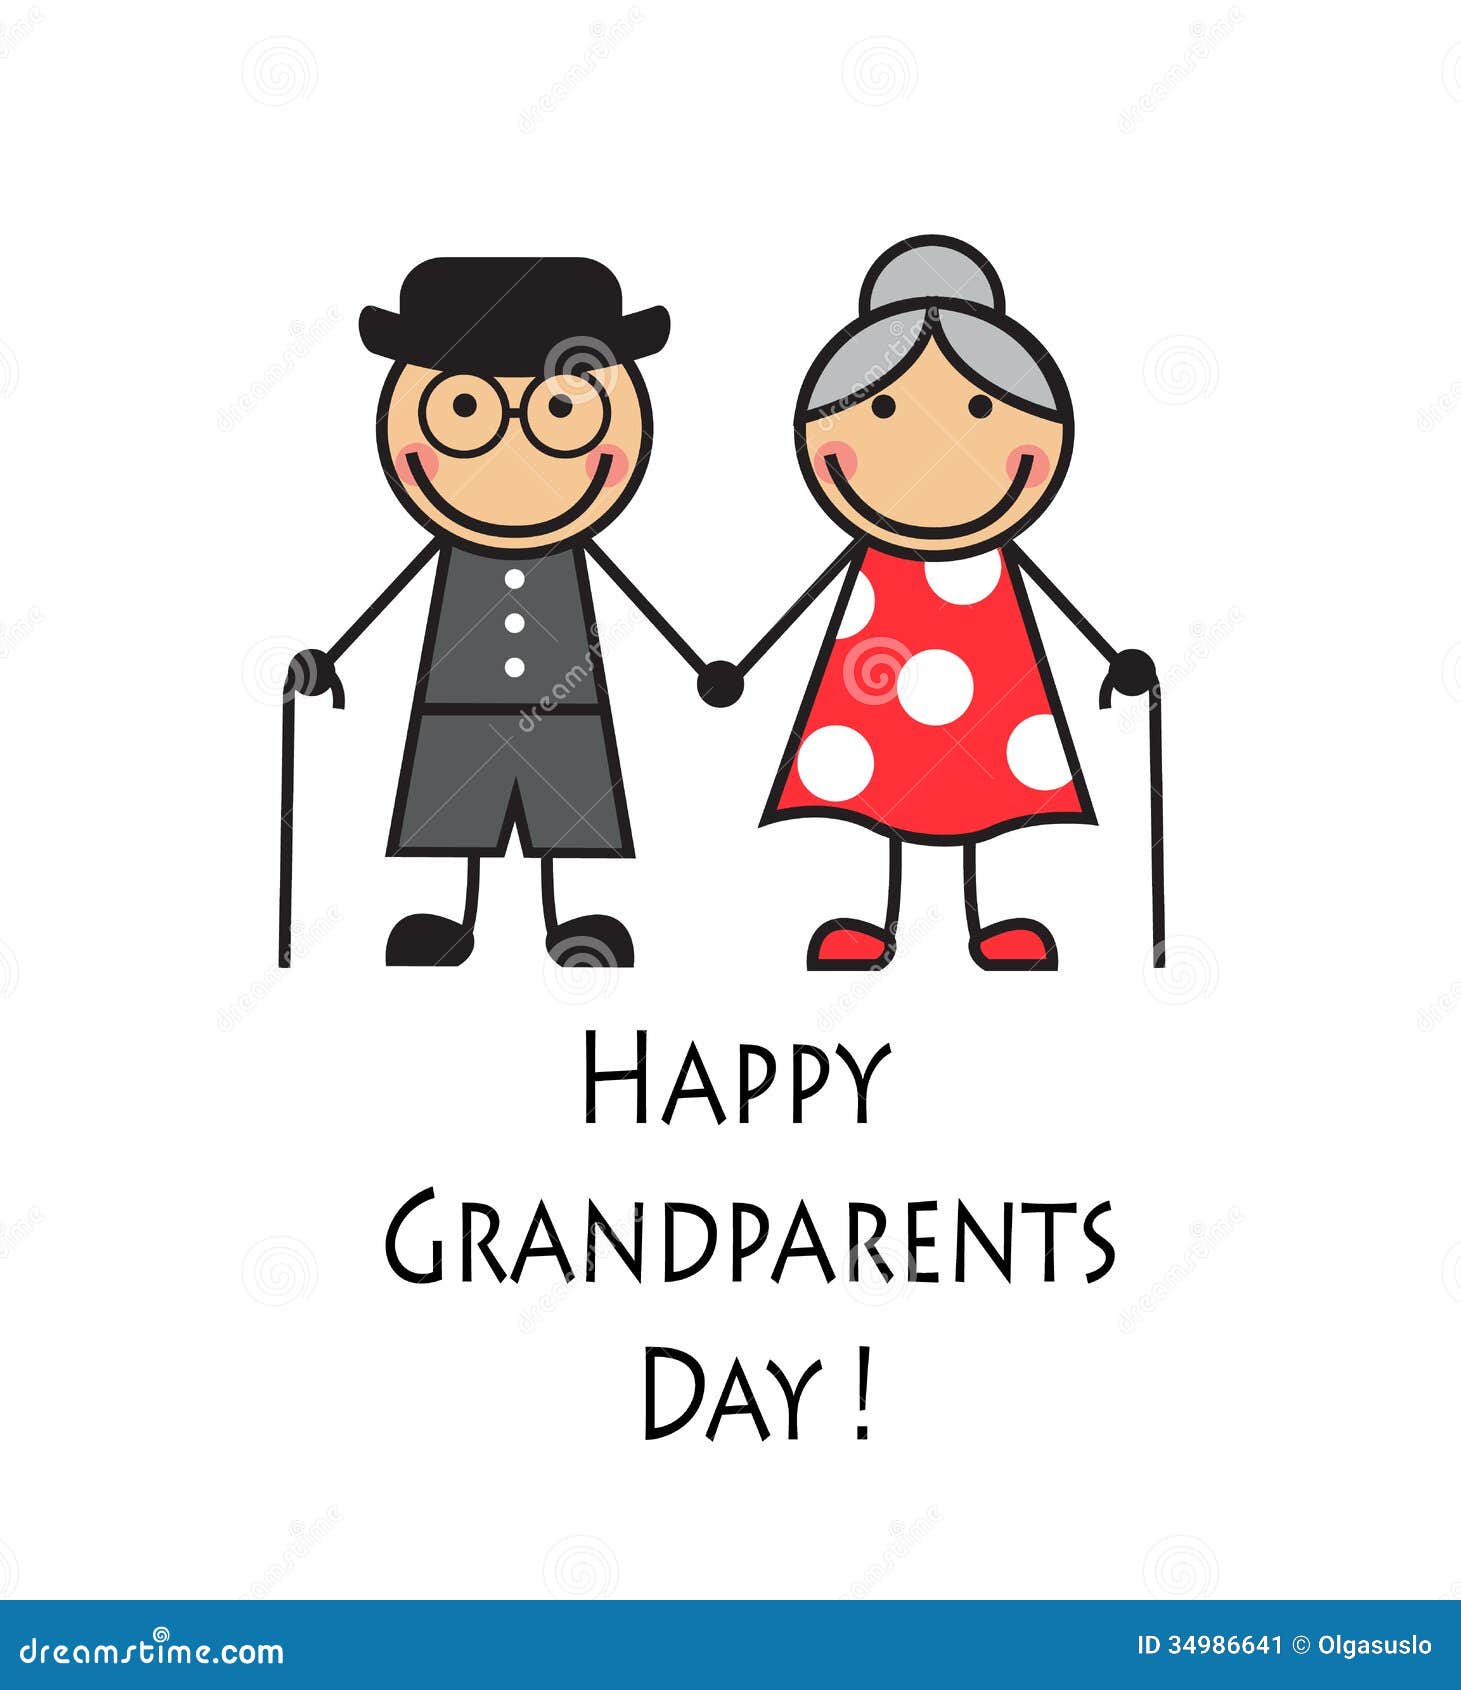 Happy grandparents day stock illustration. Illustration of cartoons -  34986641